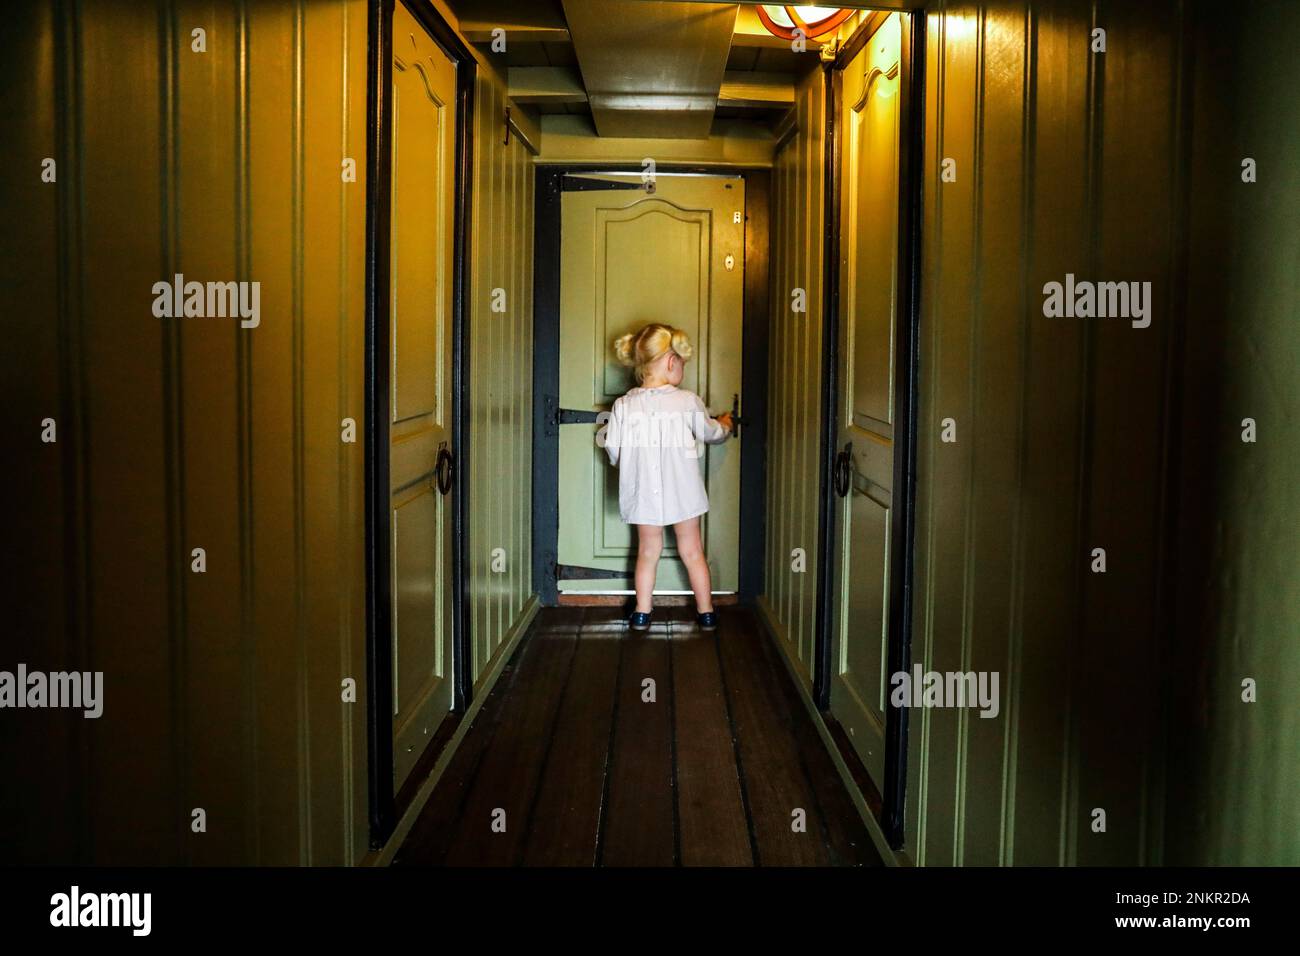 Girl standing at end of corridor in front of closed door Stock Photo